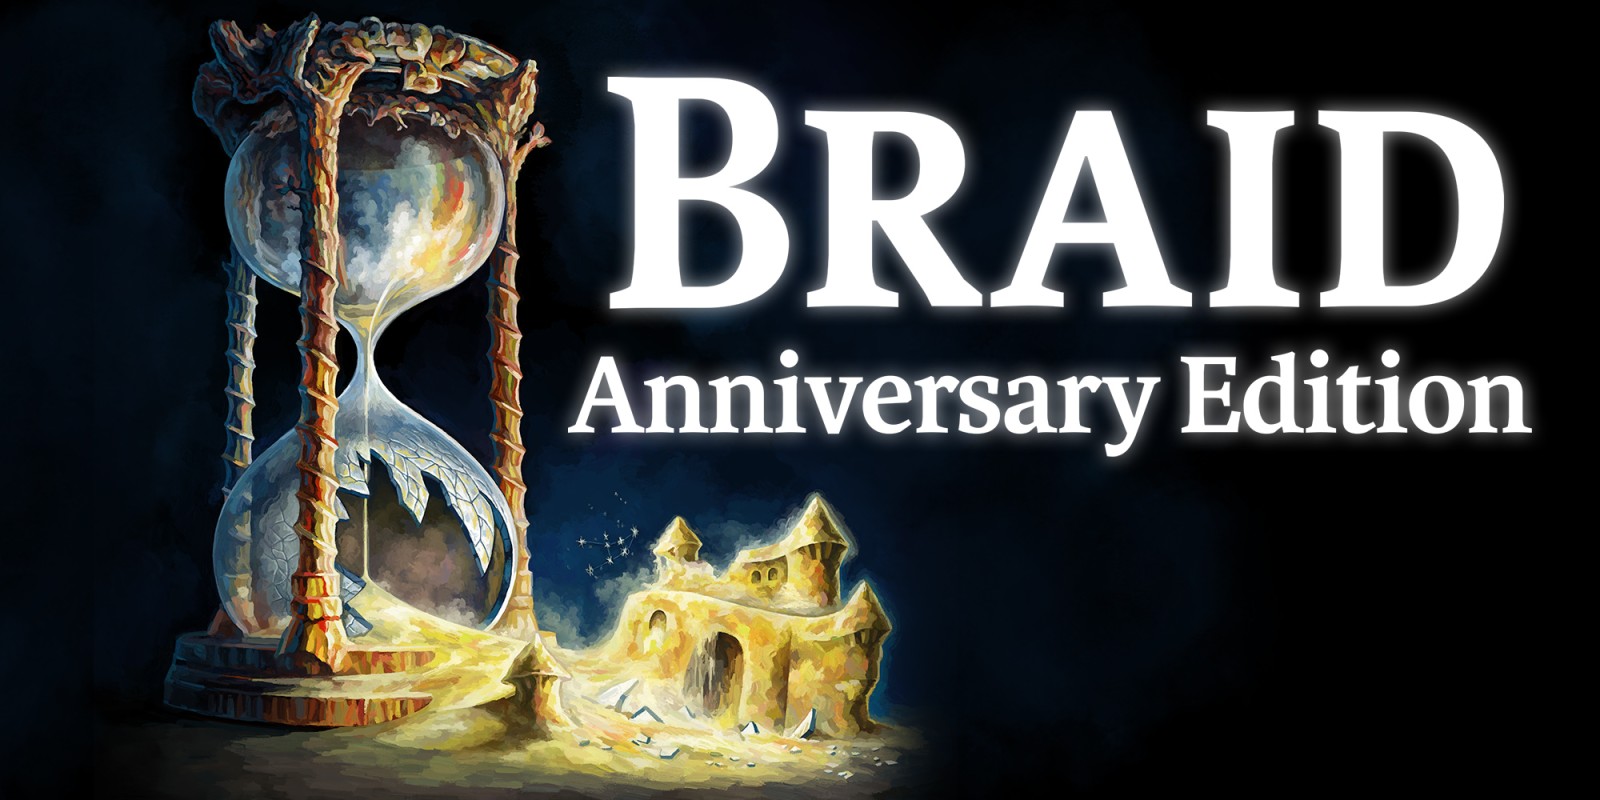 Braid, Anniversary Edition